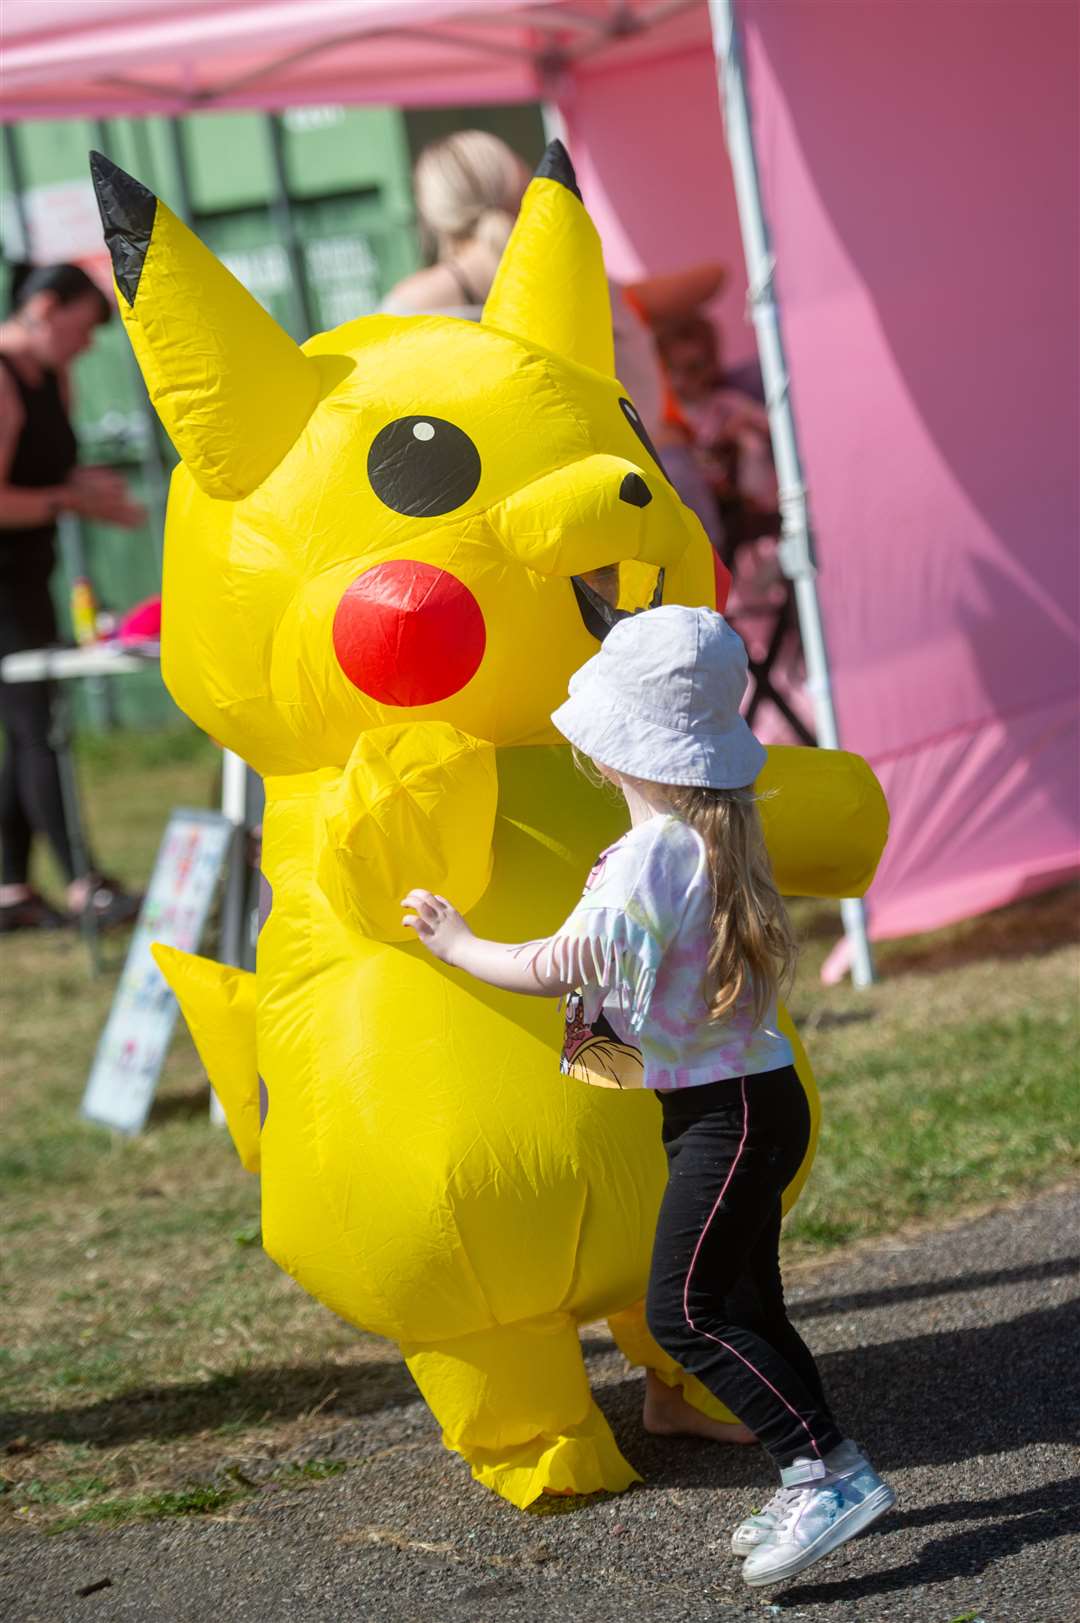 Dancing with Pikachu. Picture: Callum Mackay